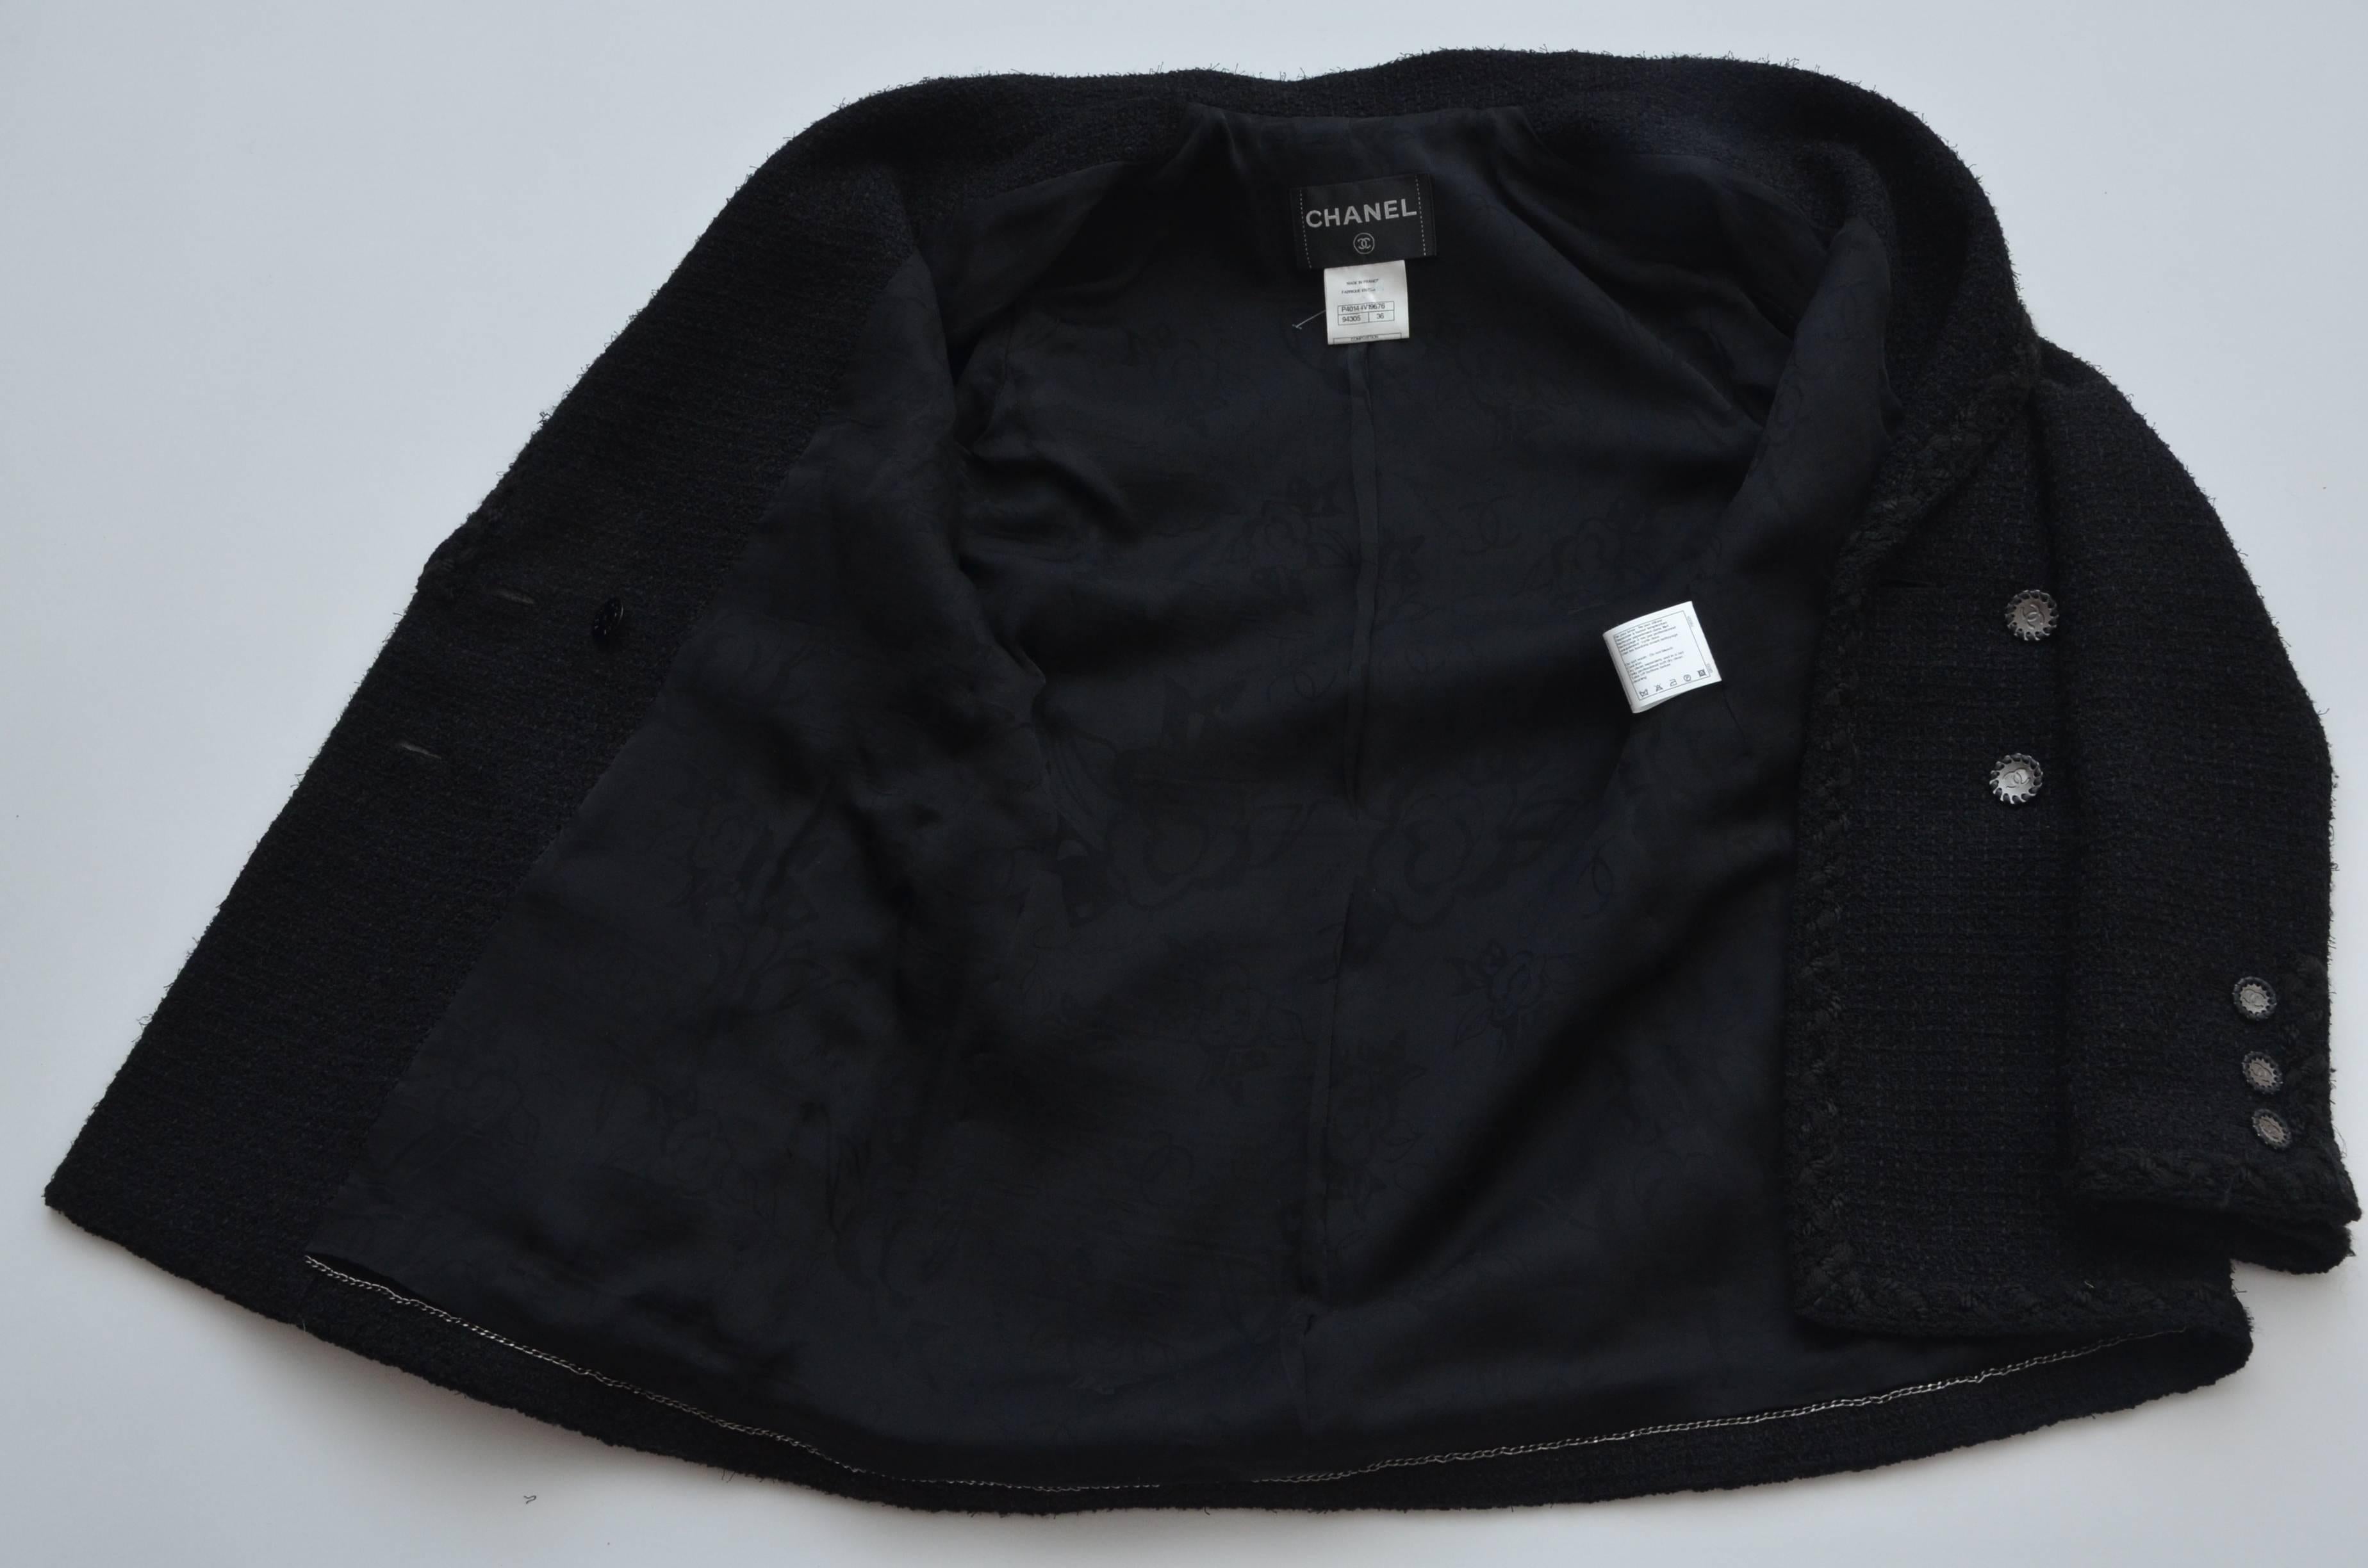 CHANEL Tweed Little Black Jacket 36... Same collection as Little Black Jacket 3